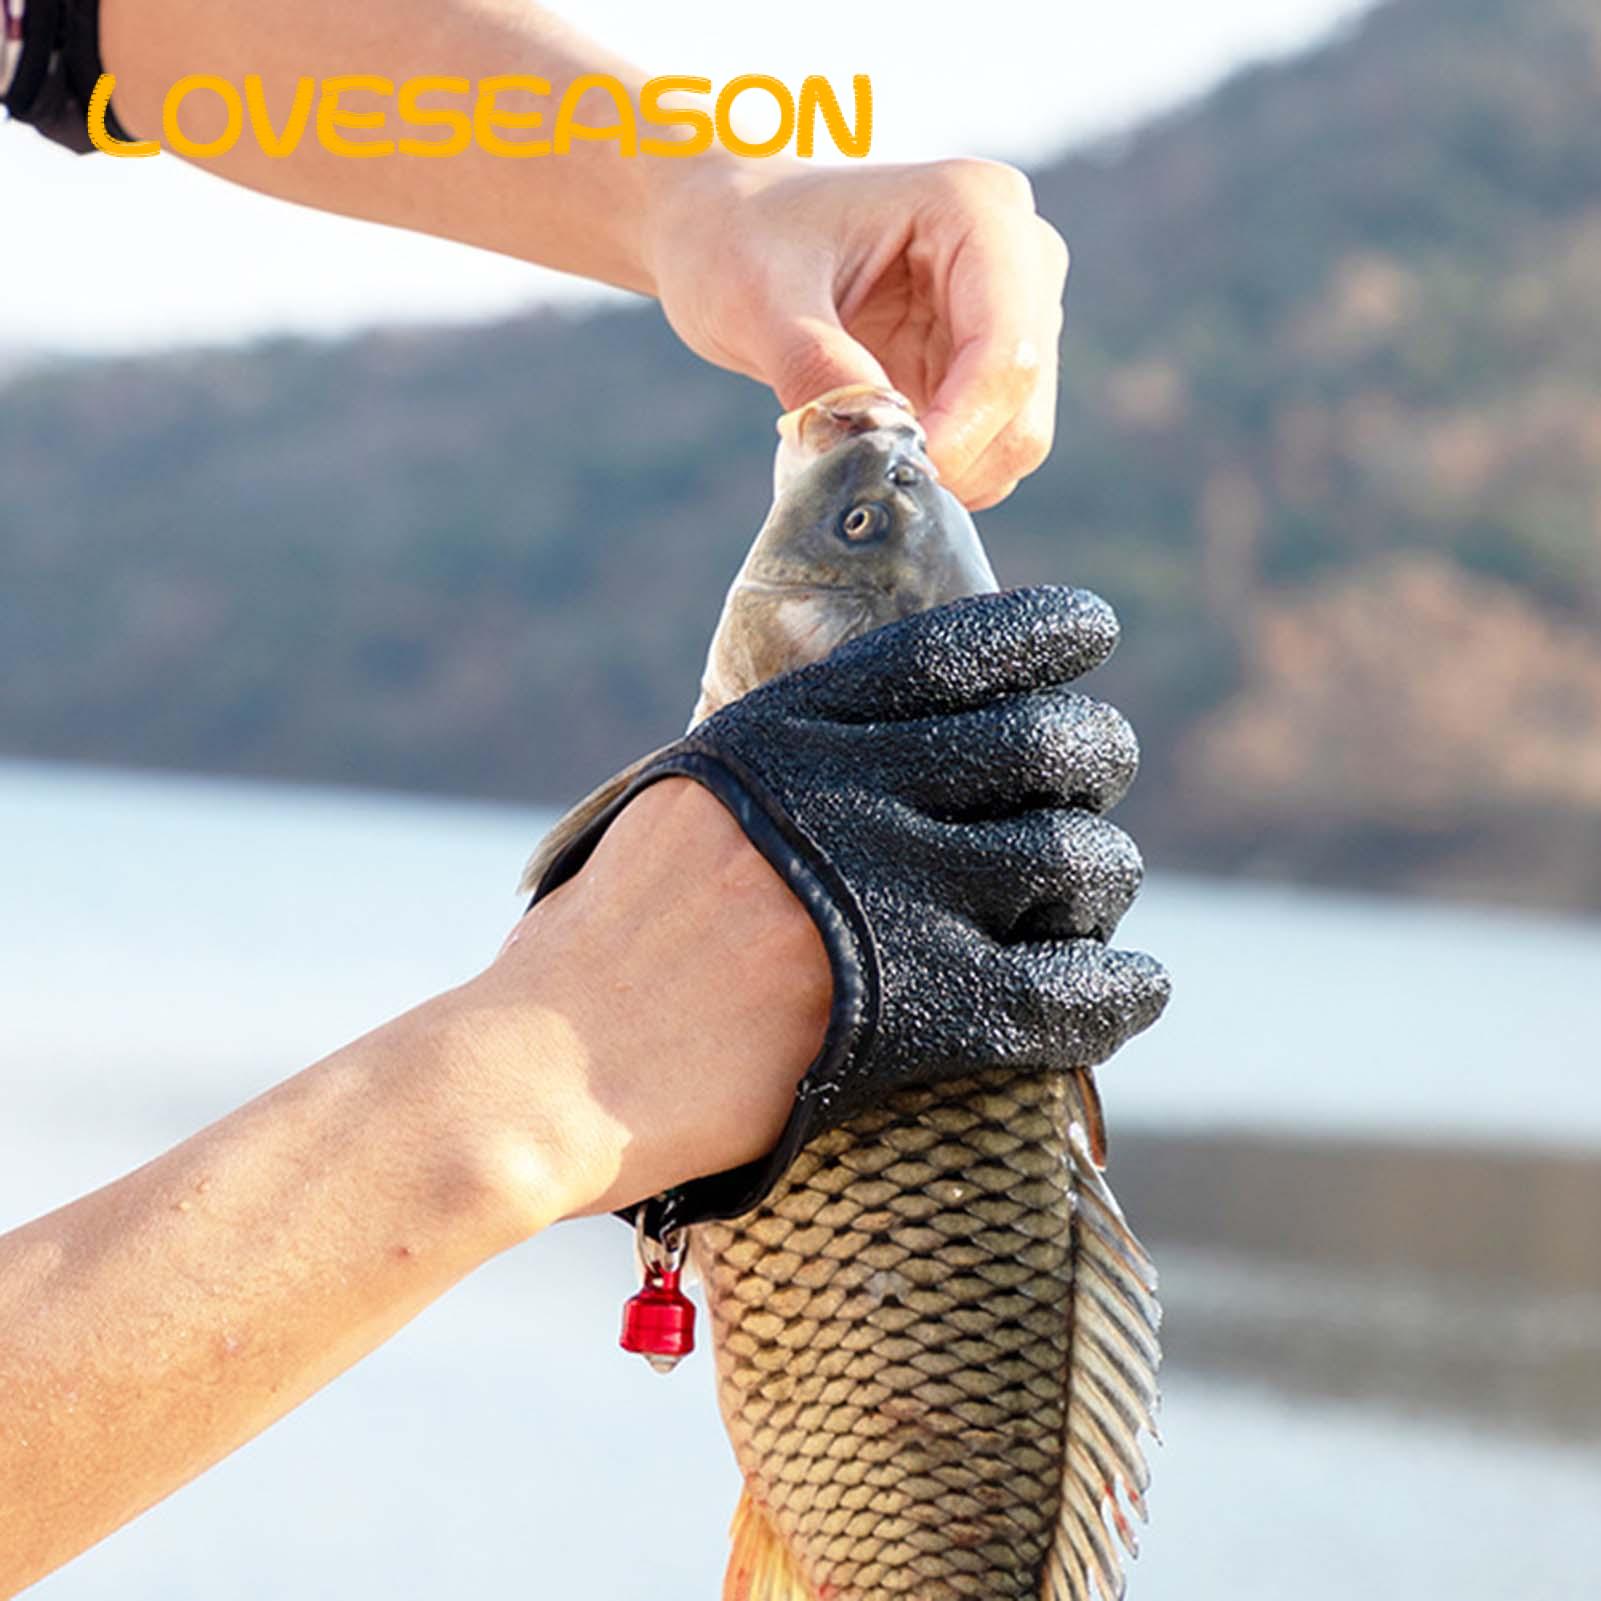 Loveseason Fishing Gloves Waterproof Handling Fish Fillet Gloves